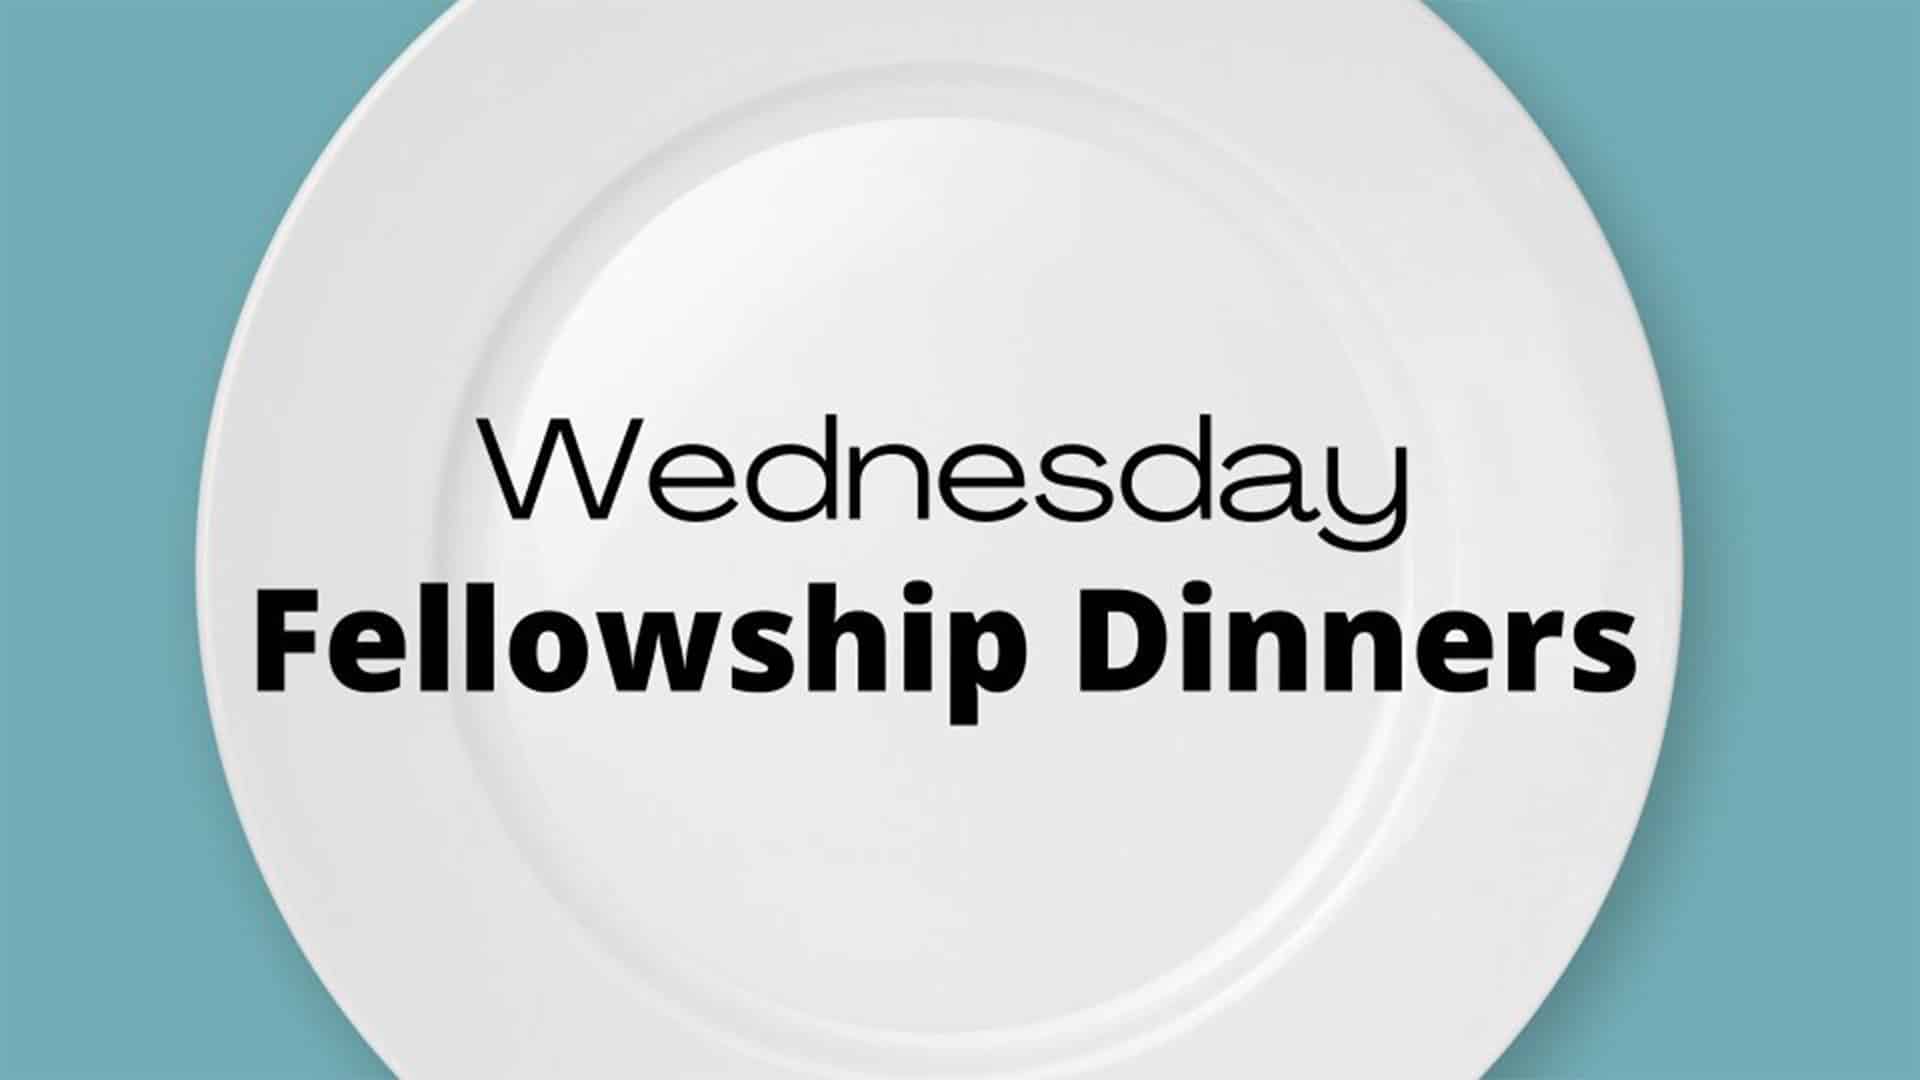 Wednesday Fellowship Dinner - Mount Vernon Baptist Church